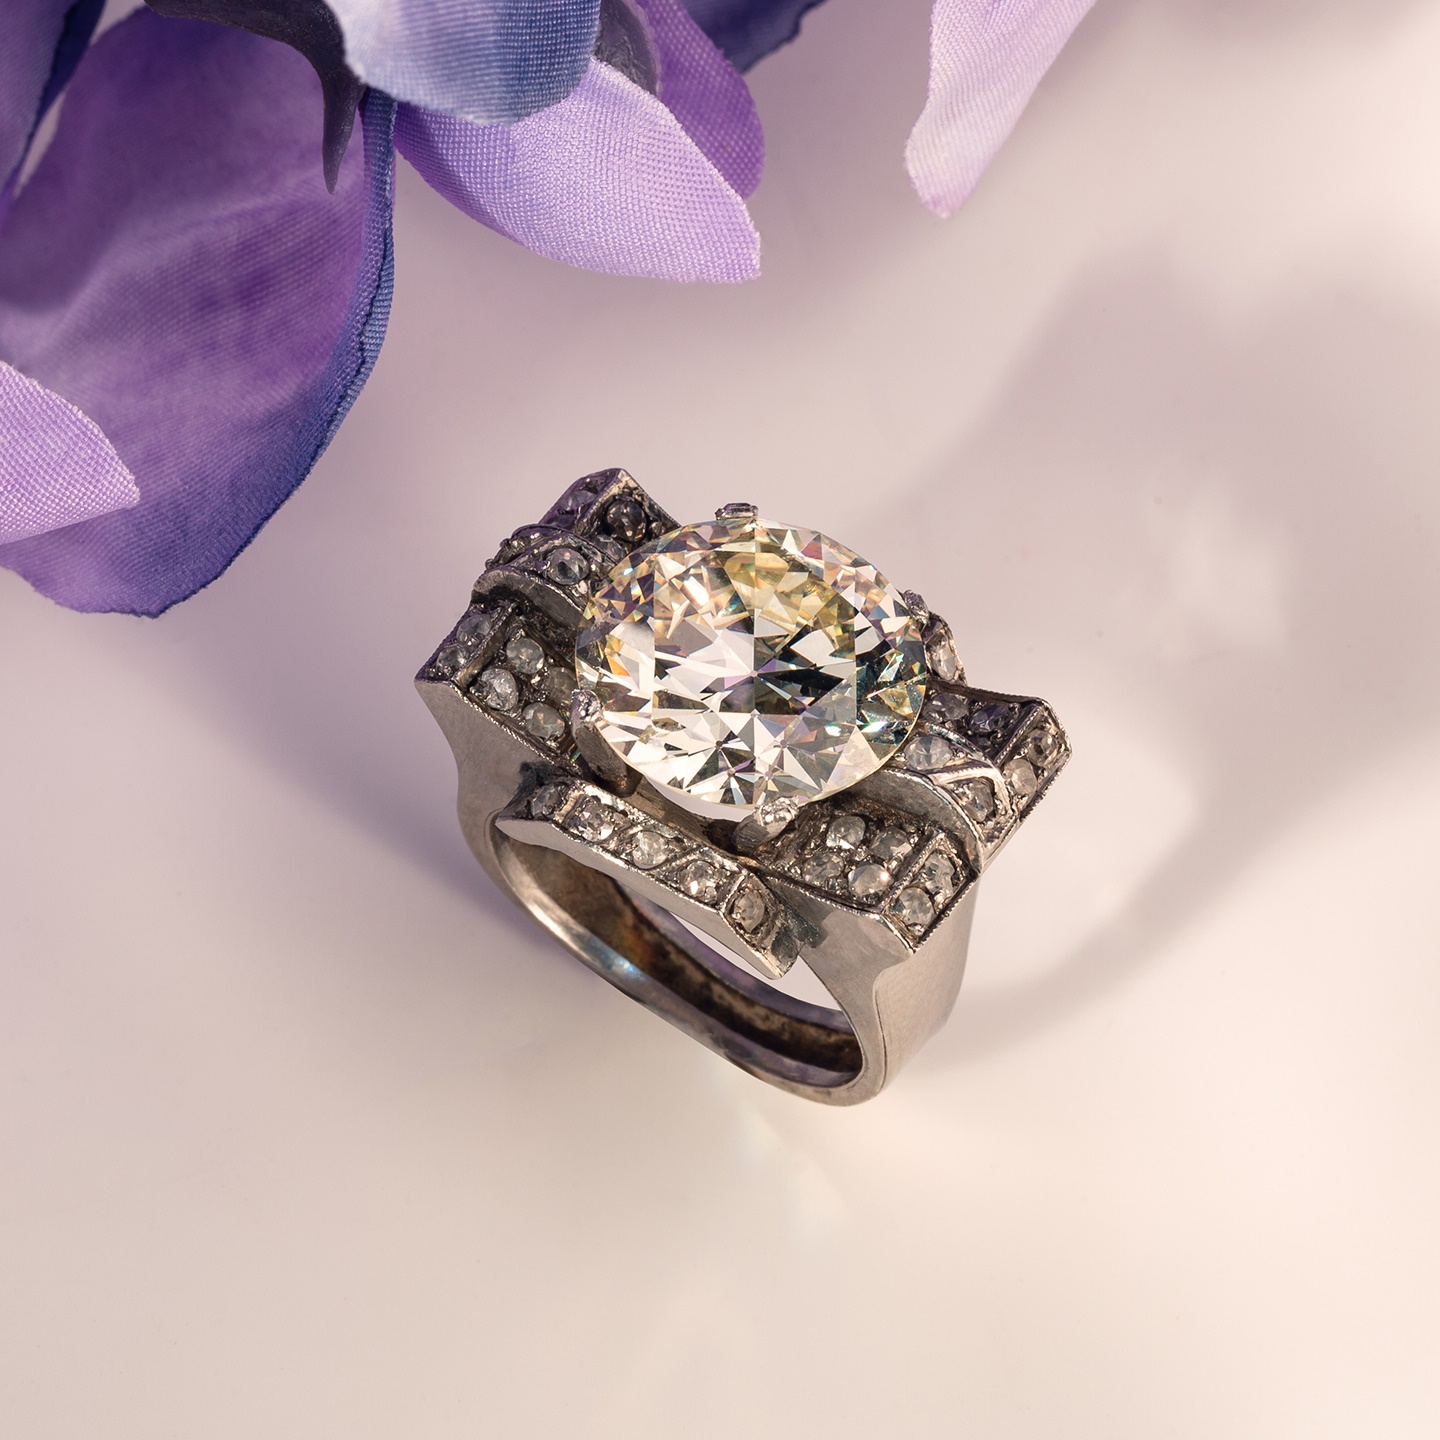 An Art Deco style diamond cocktail ring